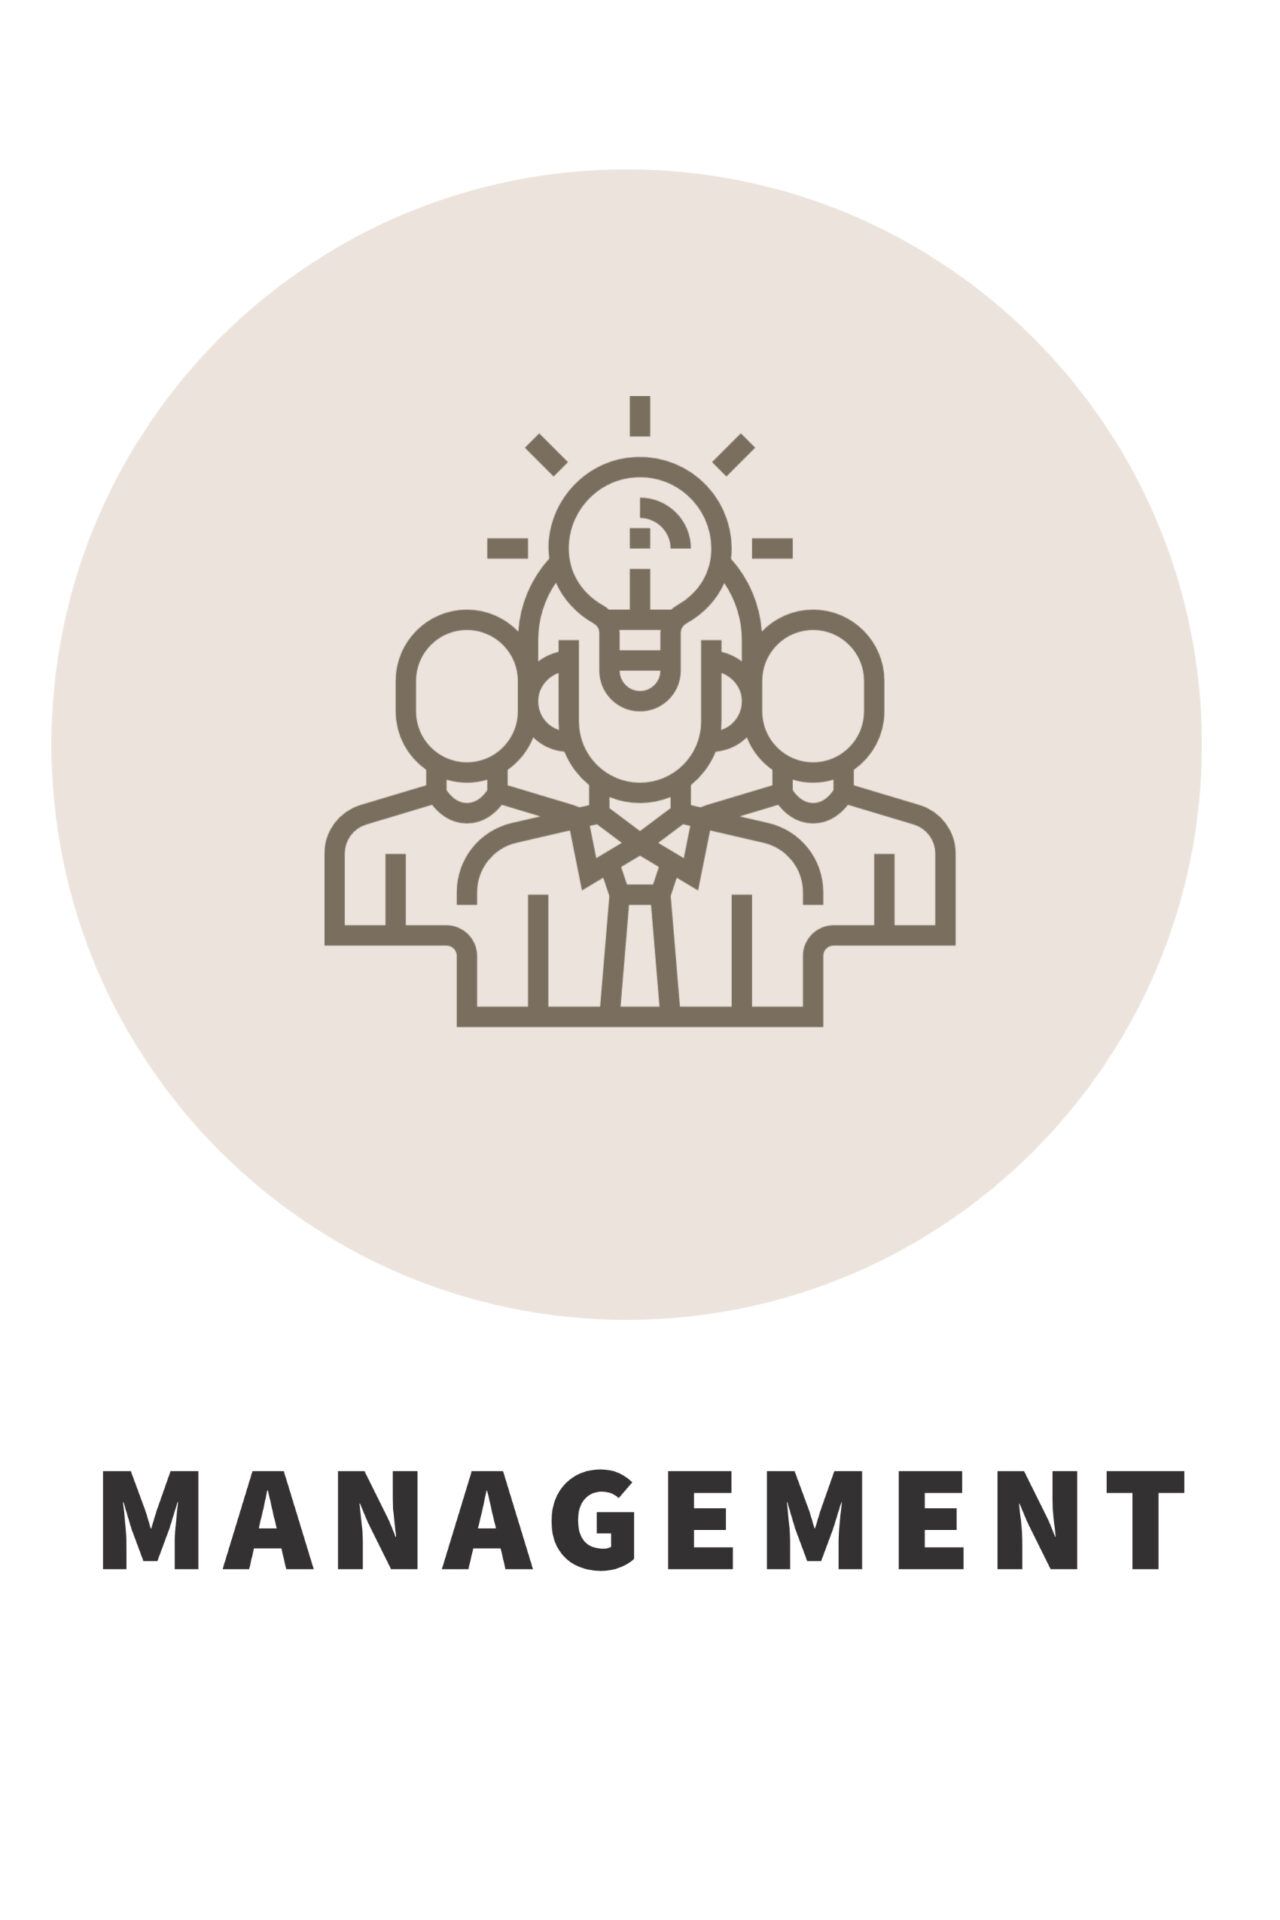 Management Blog